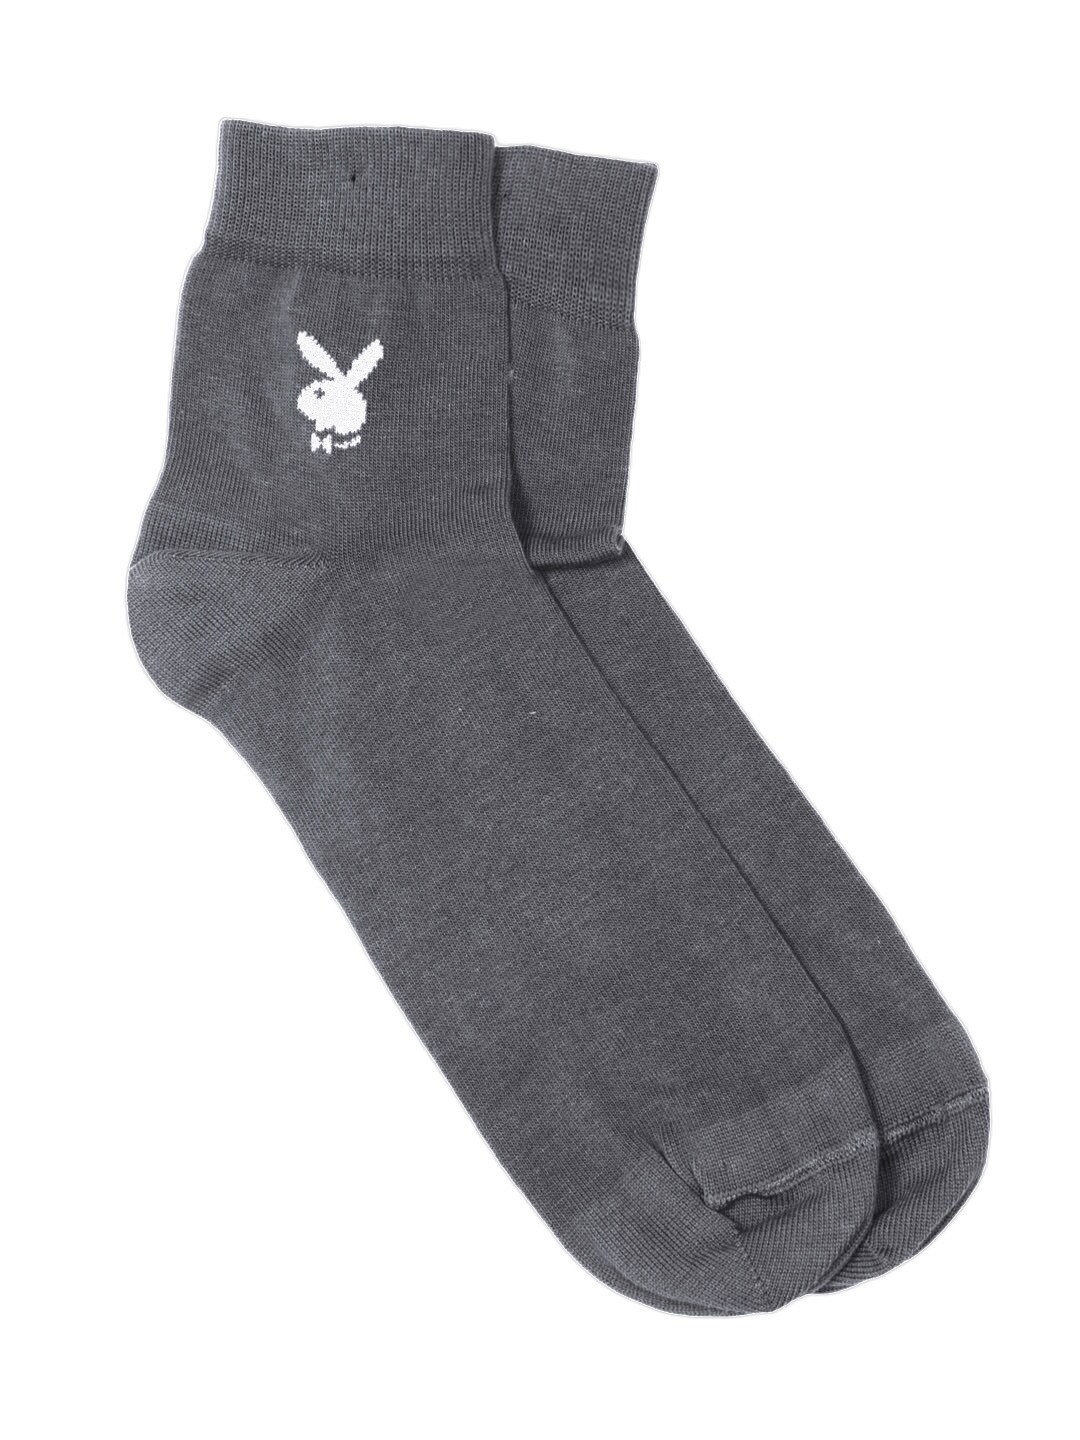 Playboy Men Grey Socks